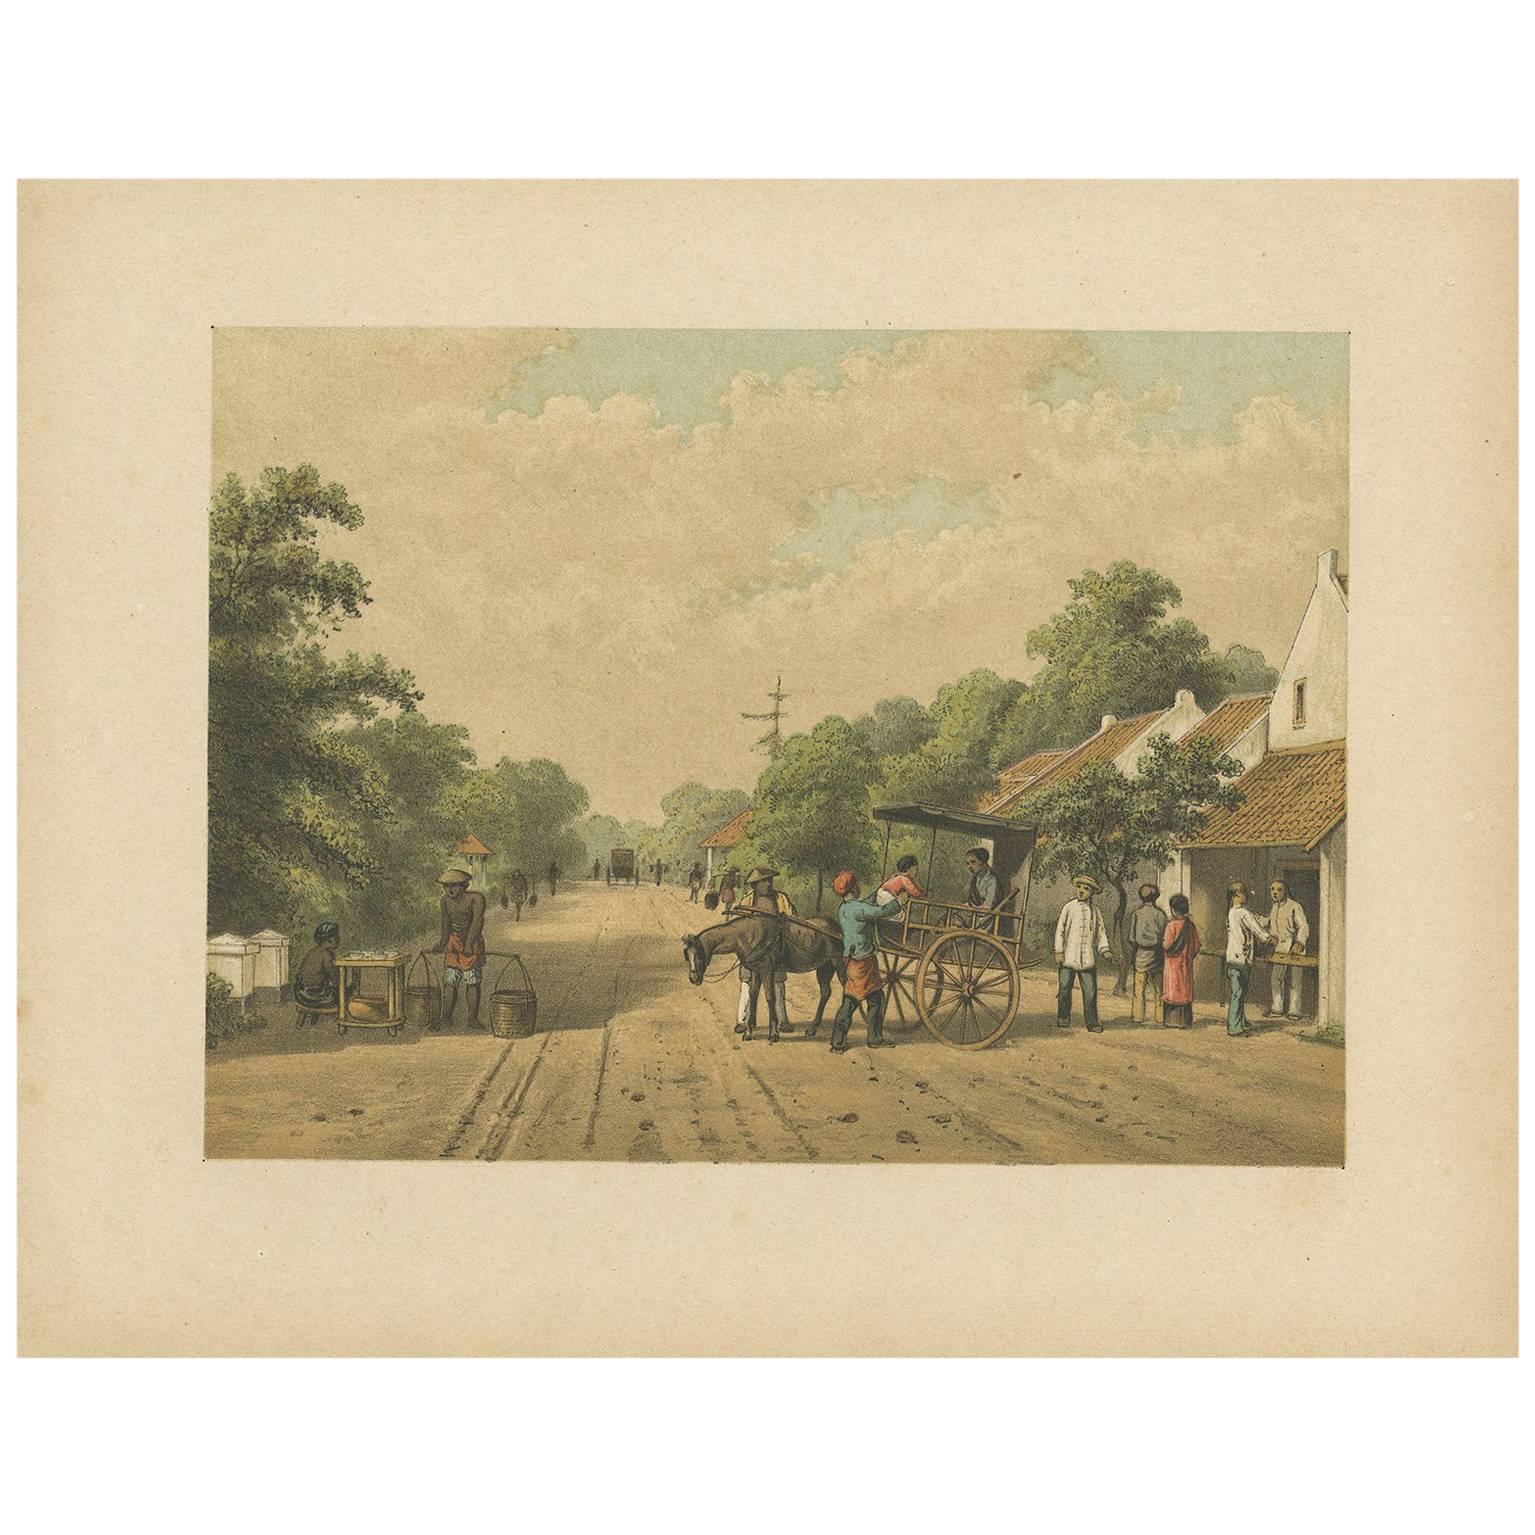 Antique Print of Locals in Batavia by M.T.H. Perelaer, 1888